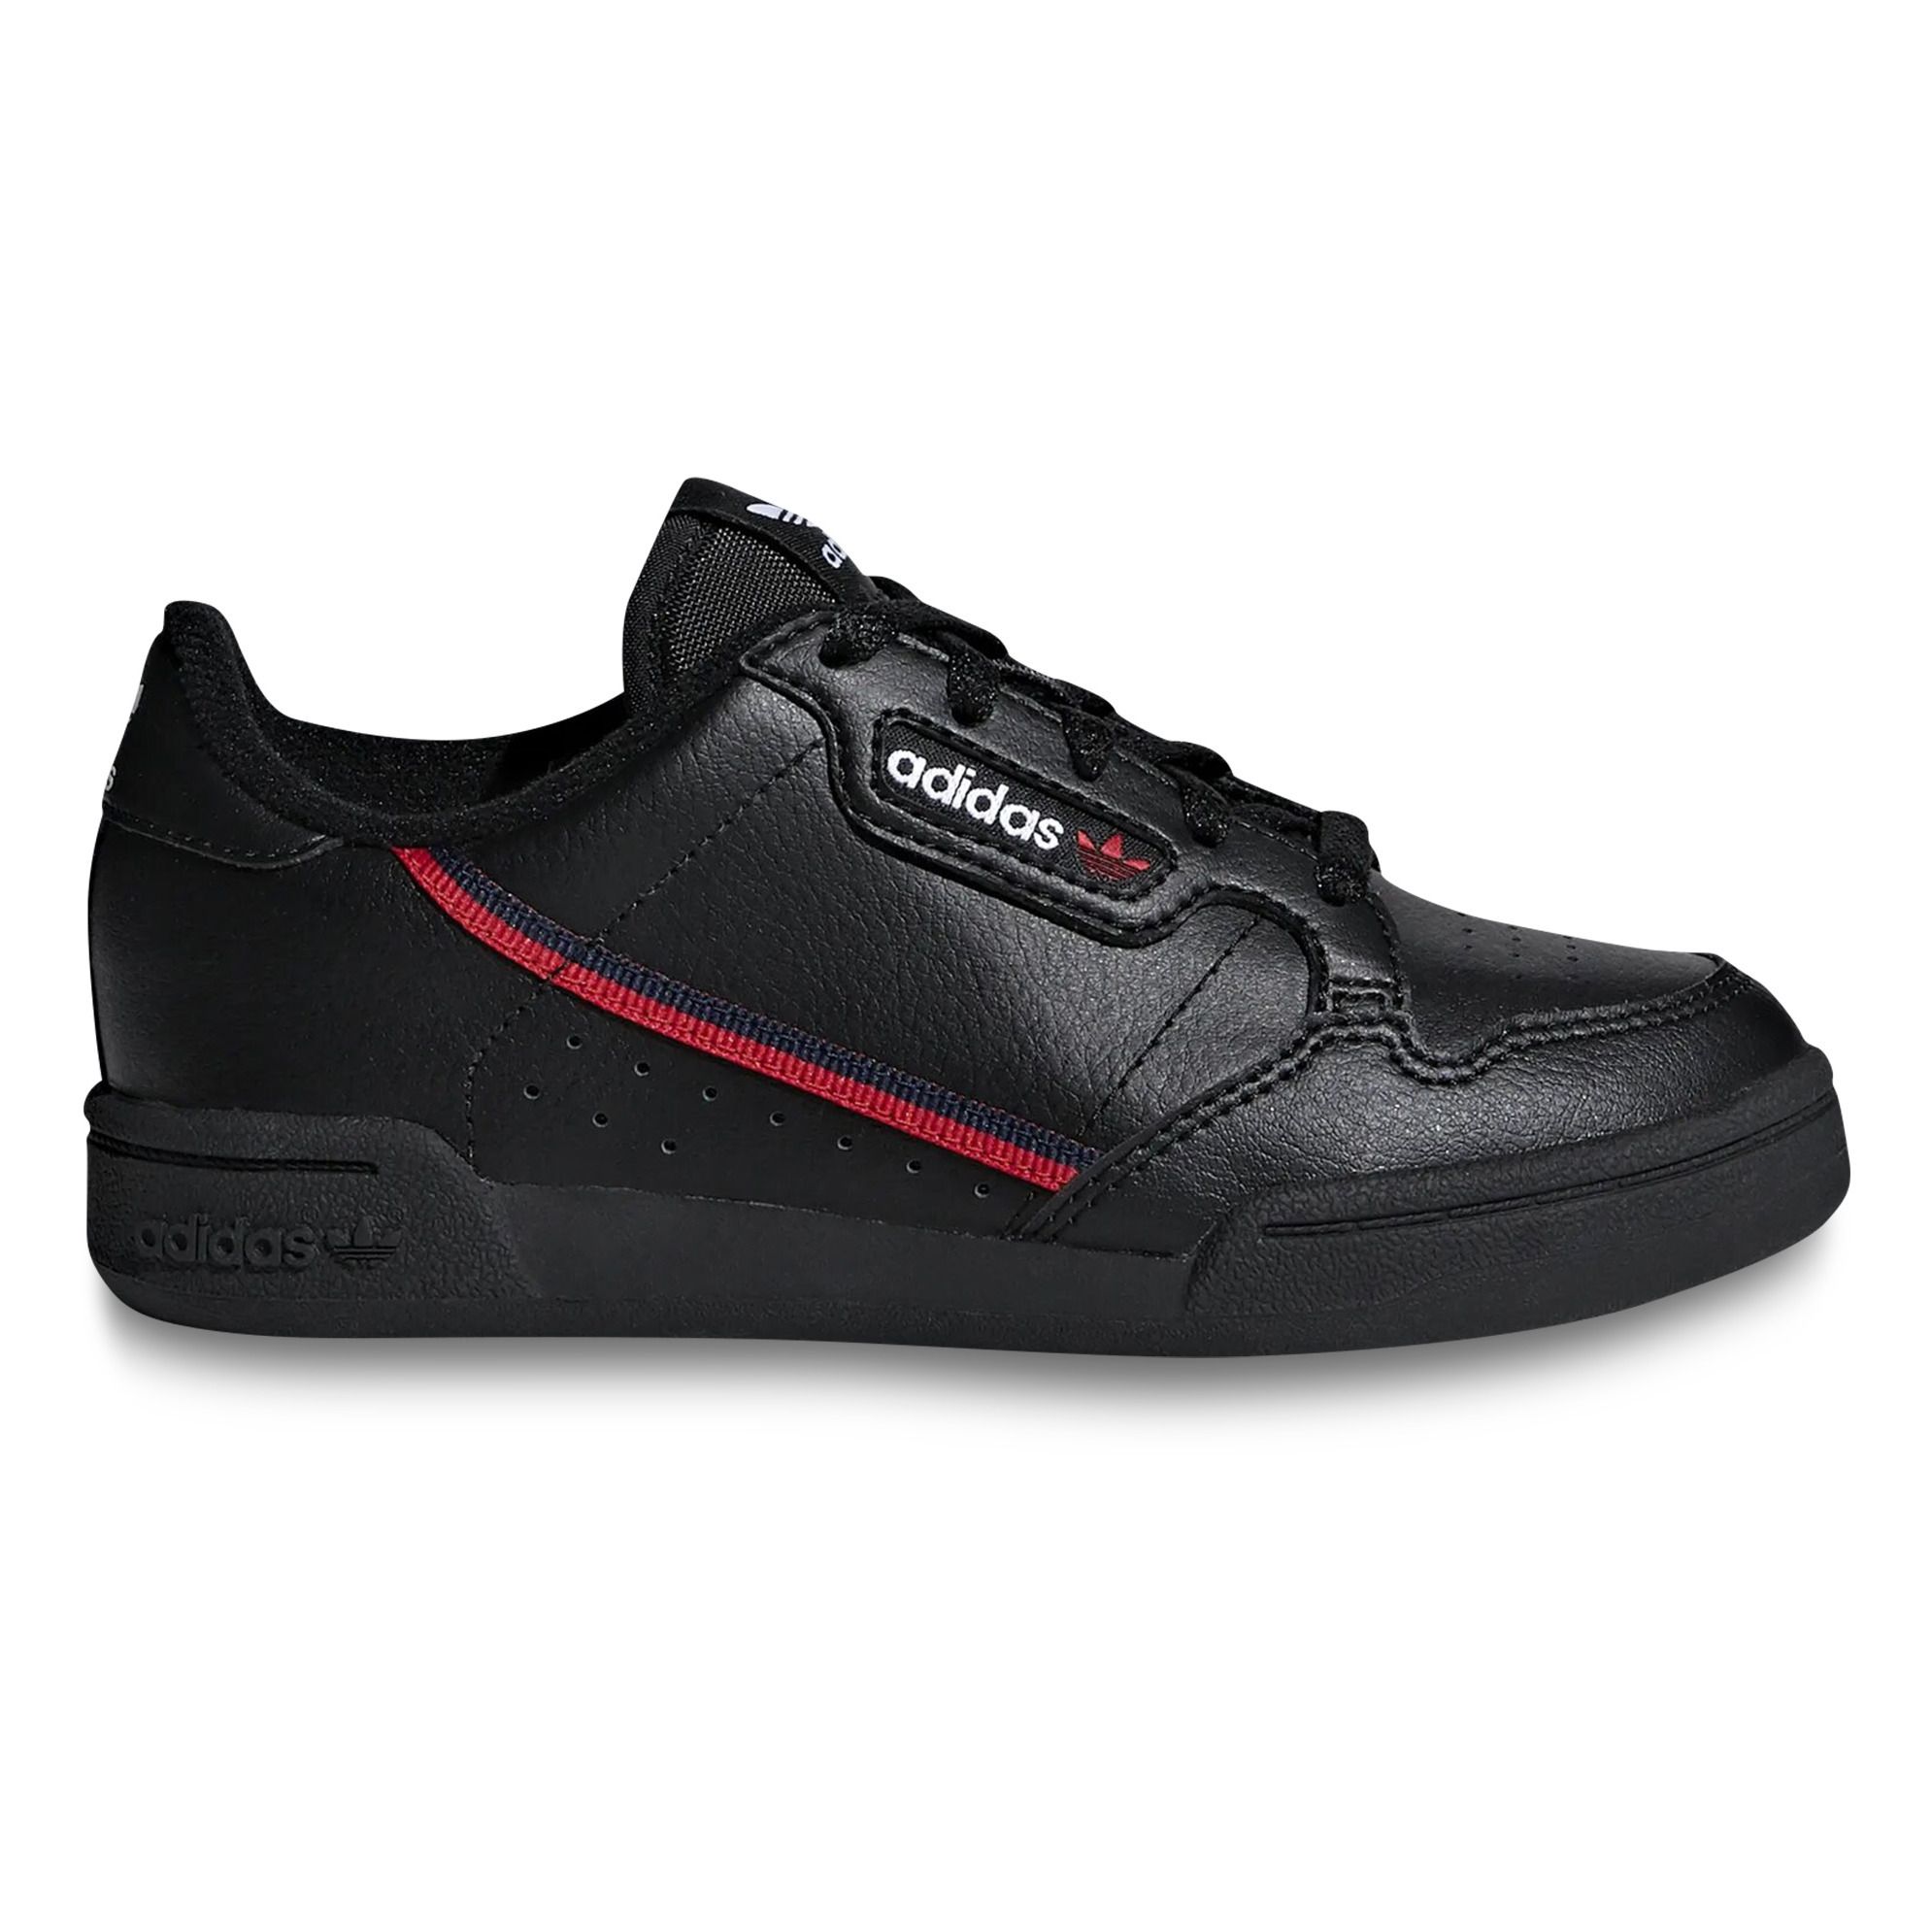 Adidas - Baskets Lacets Continental 80 - Fille - Noir